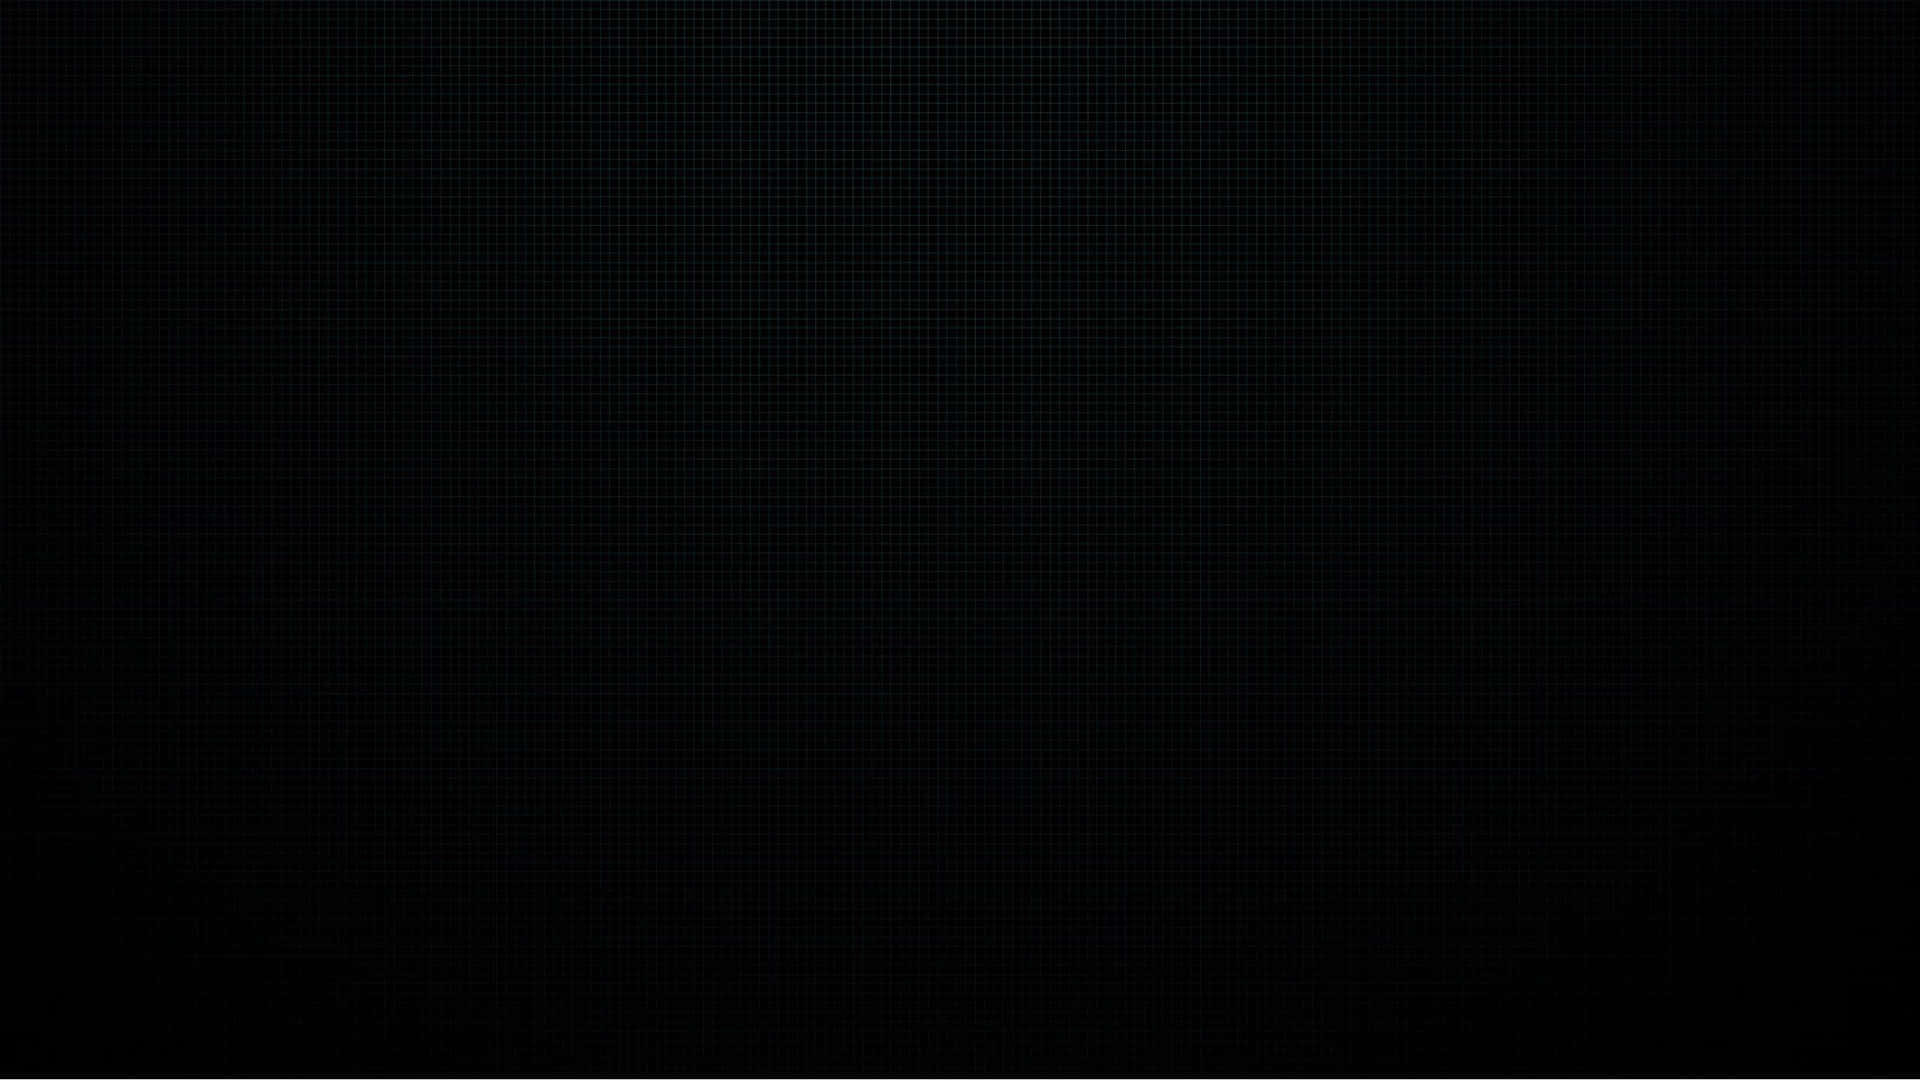 A plain black desktop 16:9 background Wallpaper